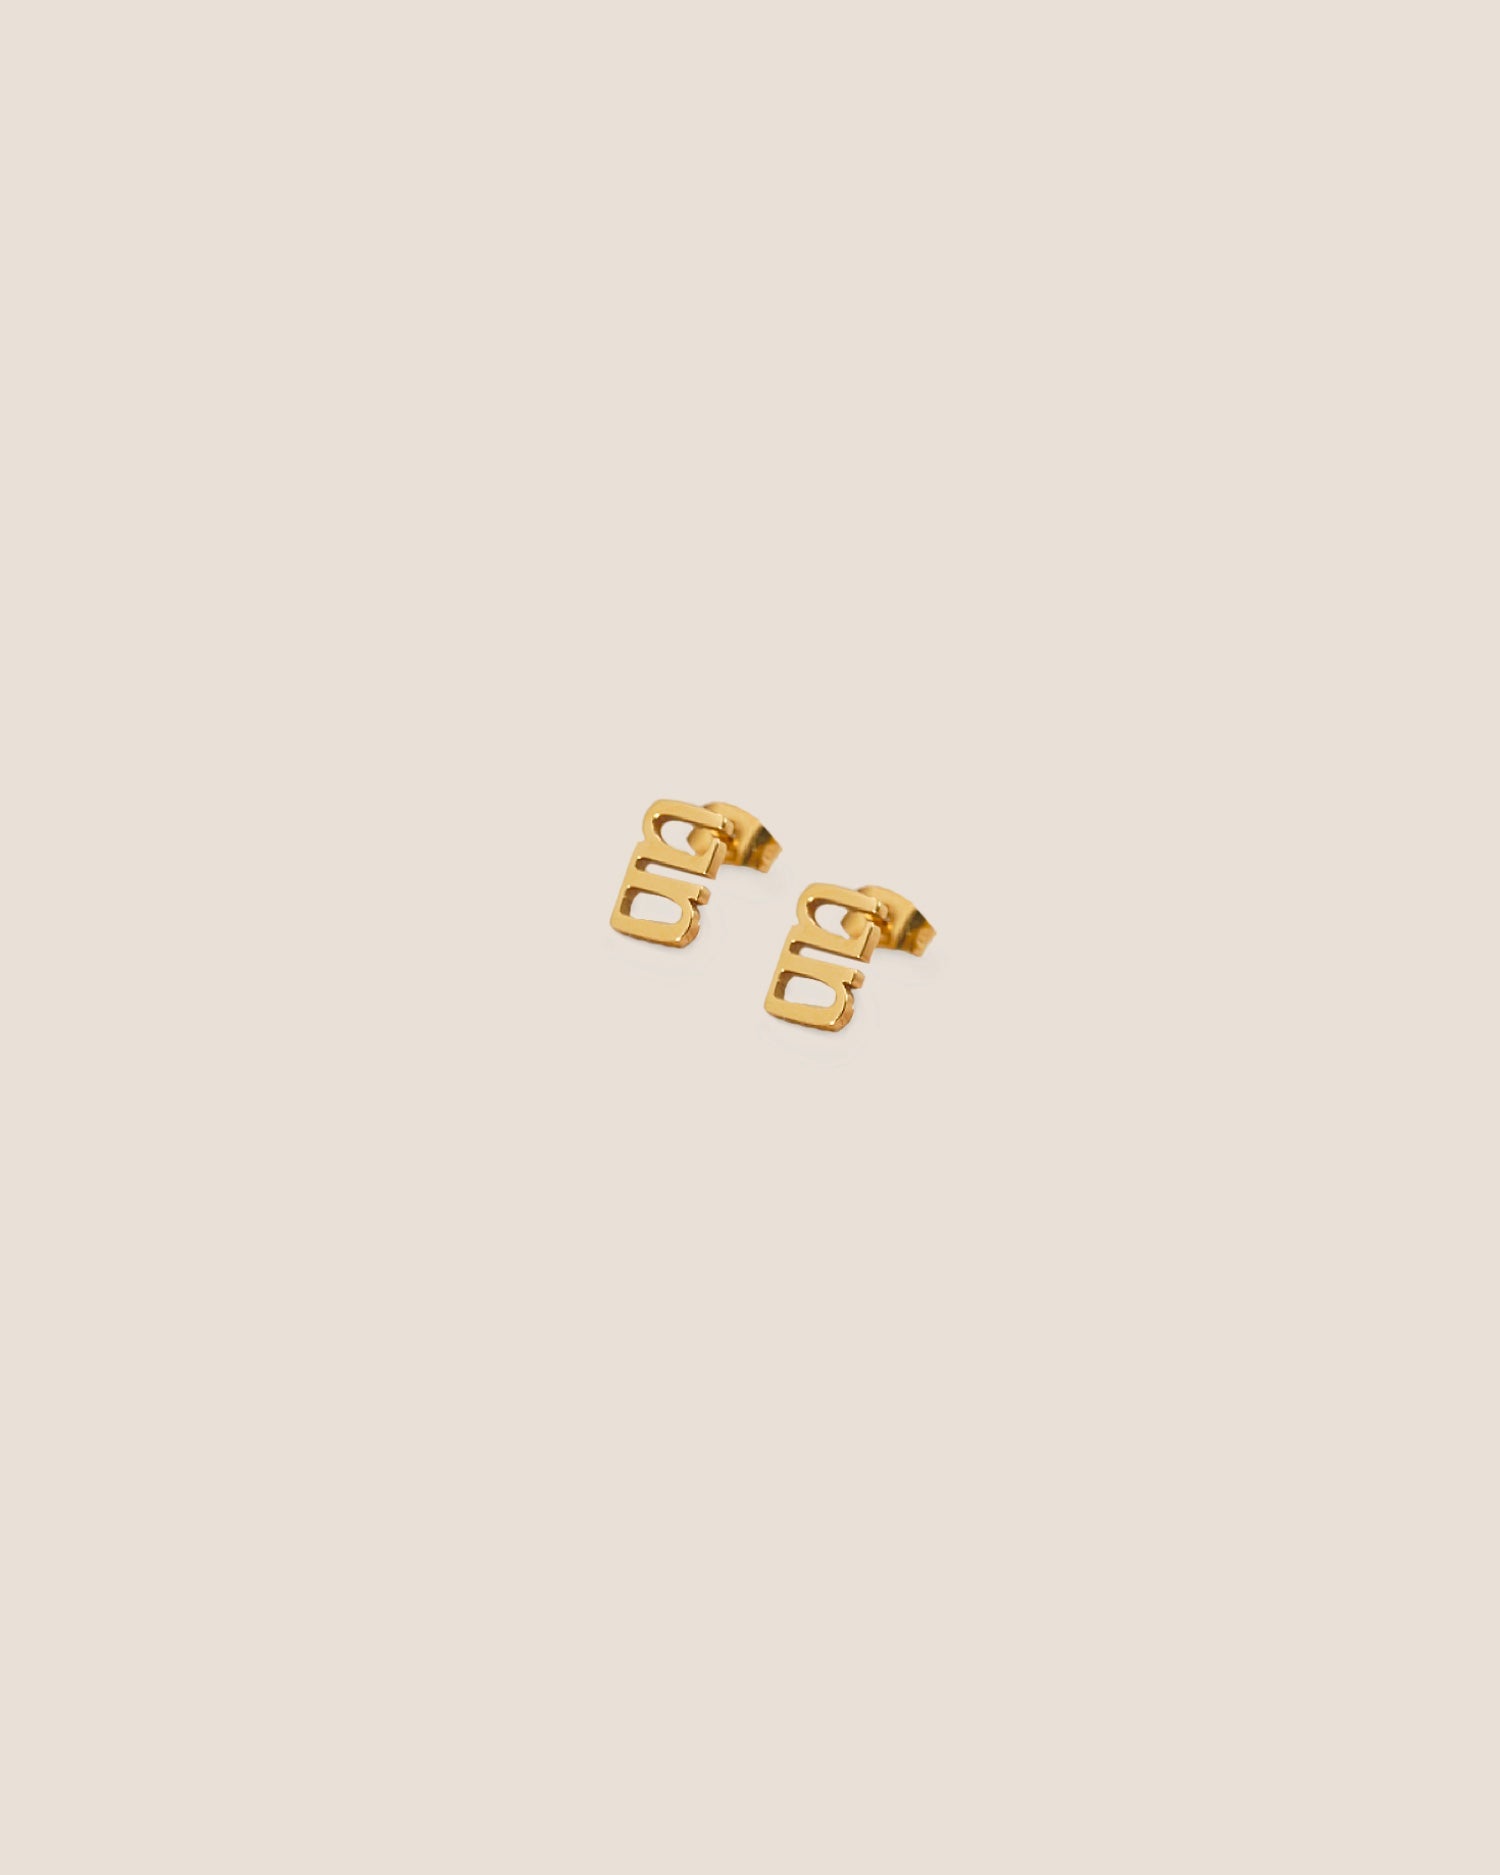 Gung Iconic Gold Stud Earrings